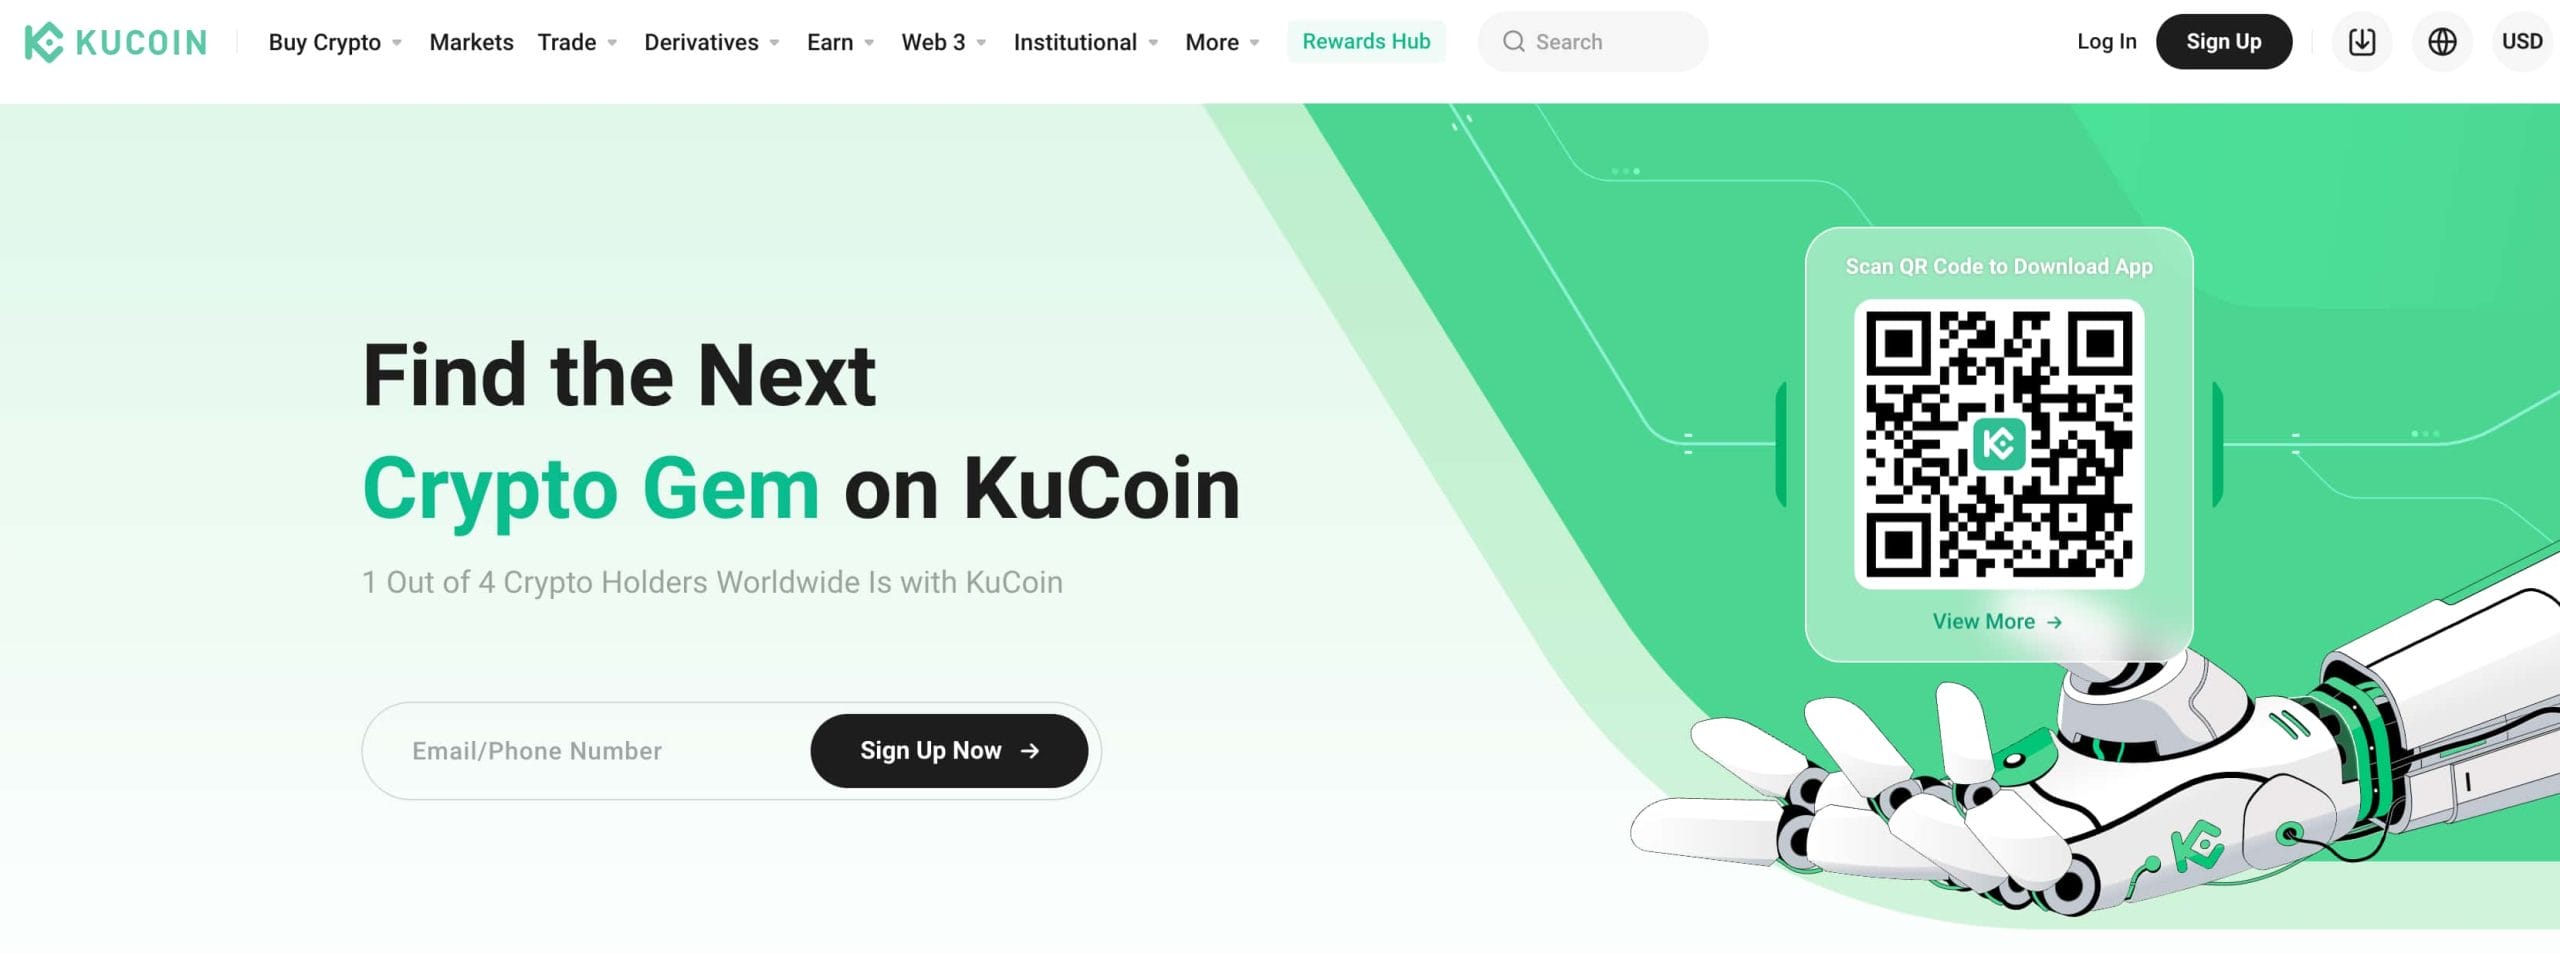 Kucoin Crypto exchange landing page 